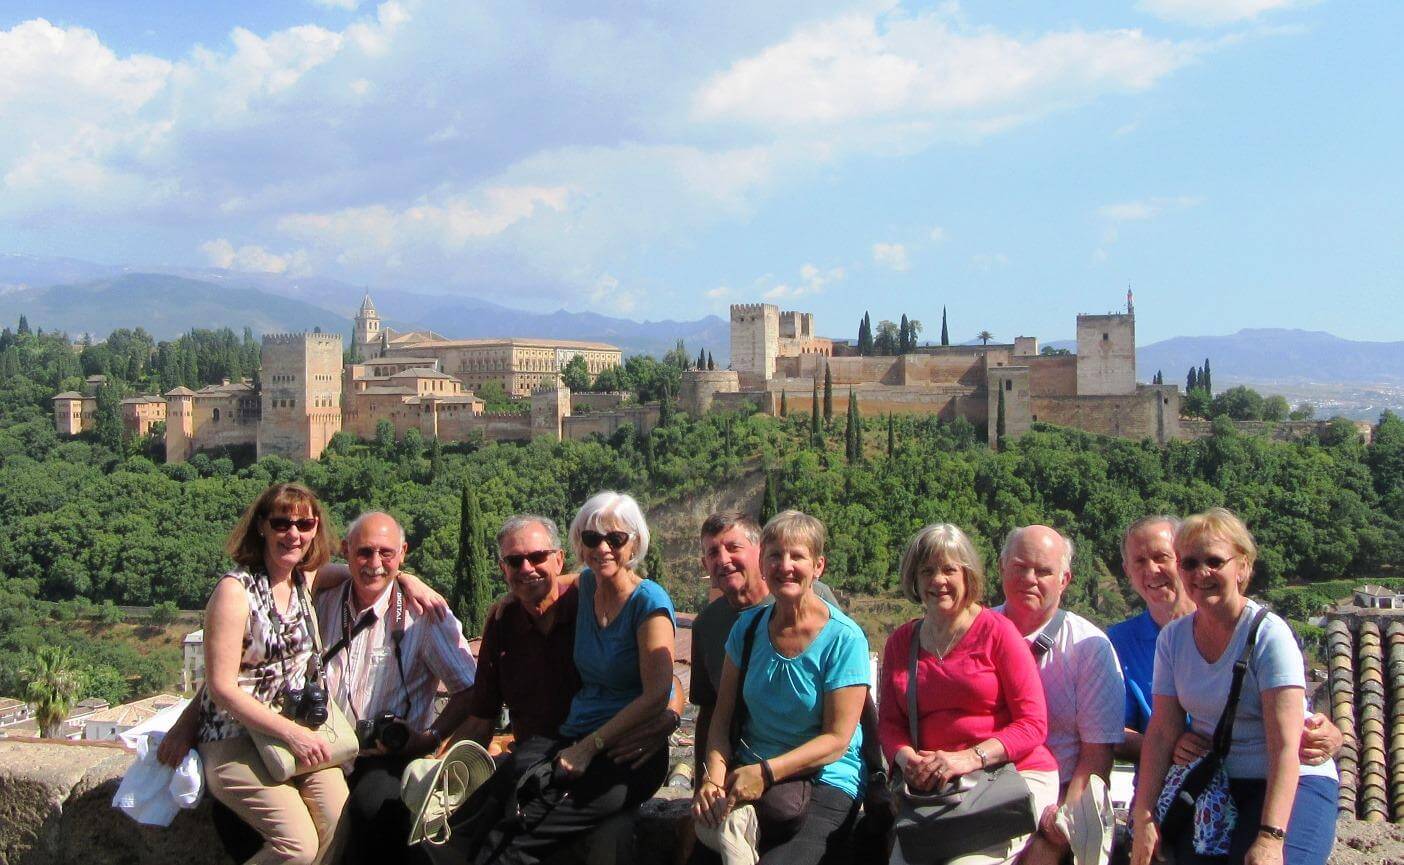 Over 50s Travel in Spain & Portugal | Totally Spain Travel Blog